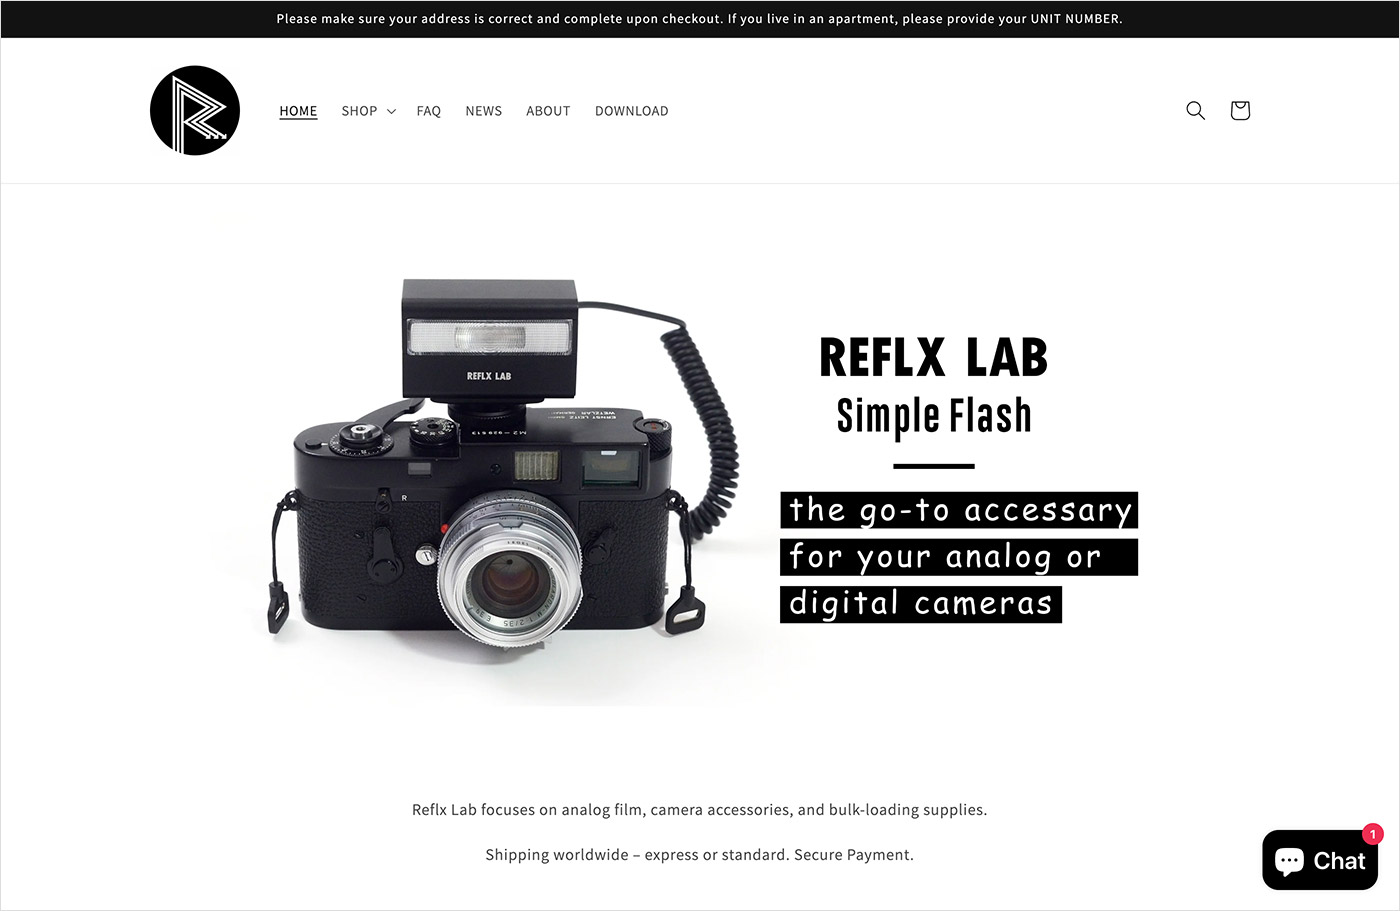 Reflx Labウェブサイトの画面キャプチャ画像